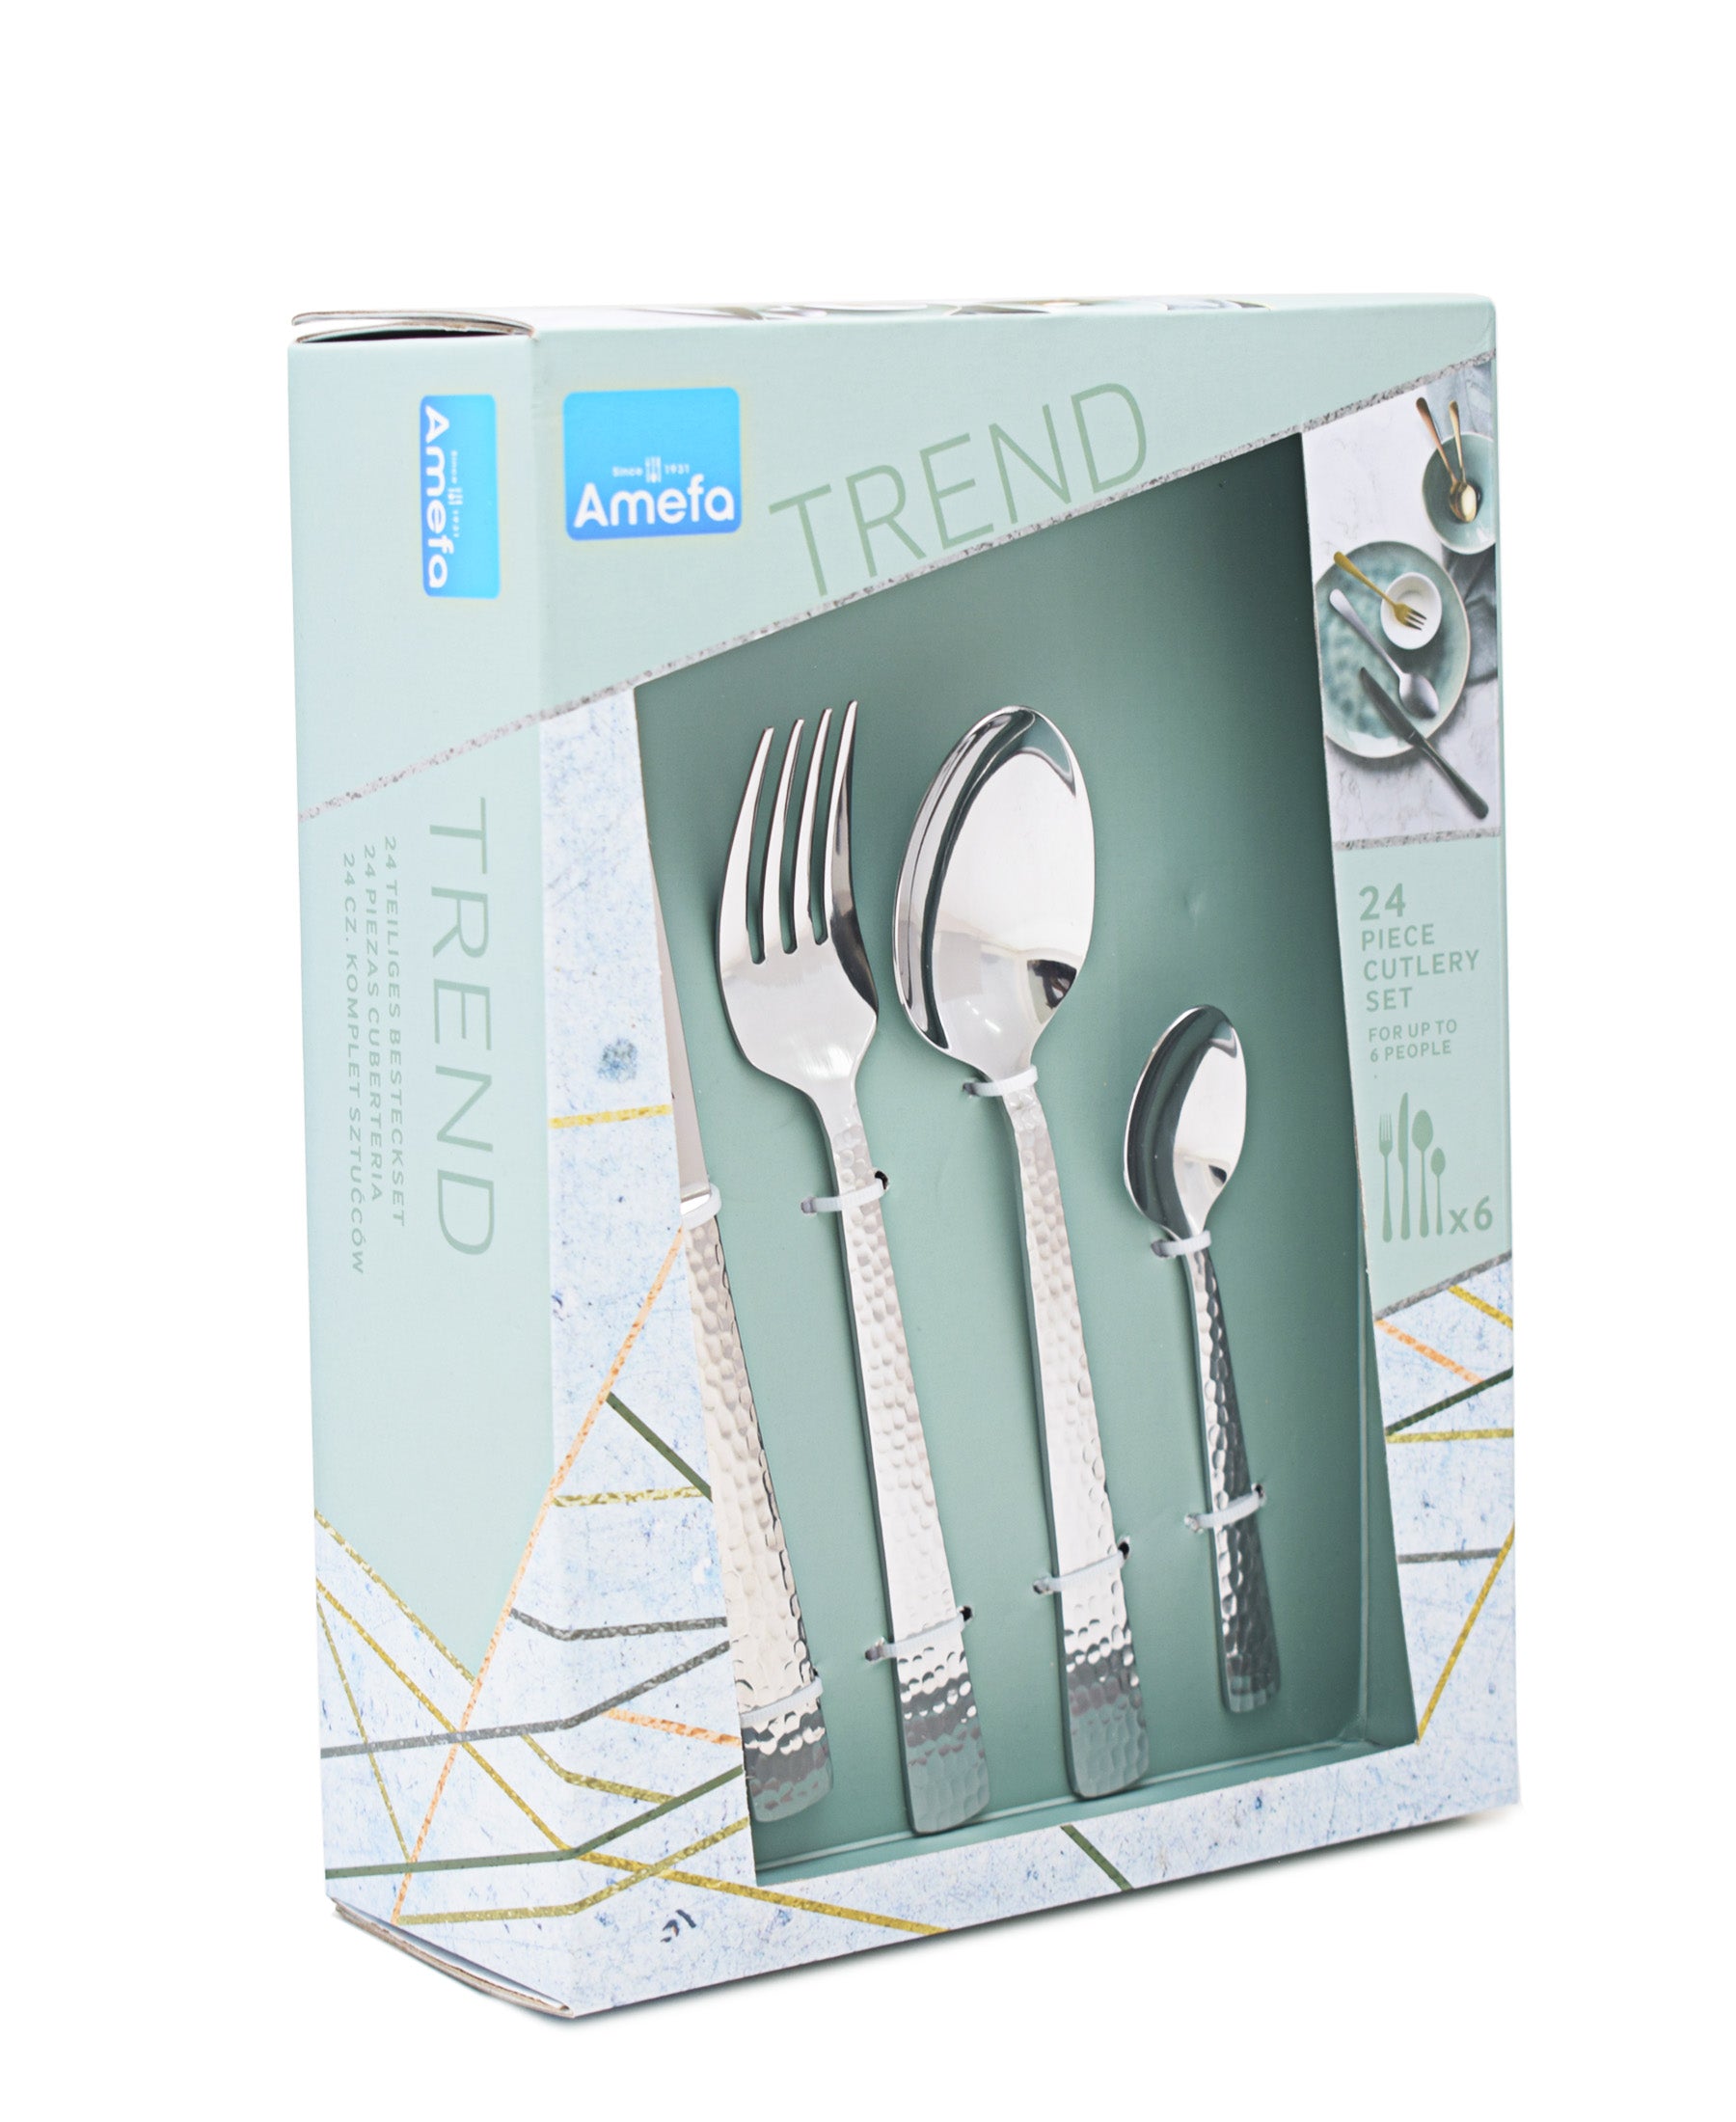 Amefa Trend 24 Piece Cutlery Set - Silver